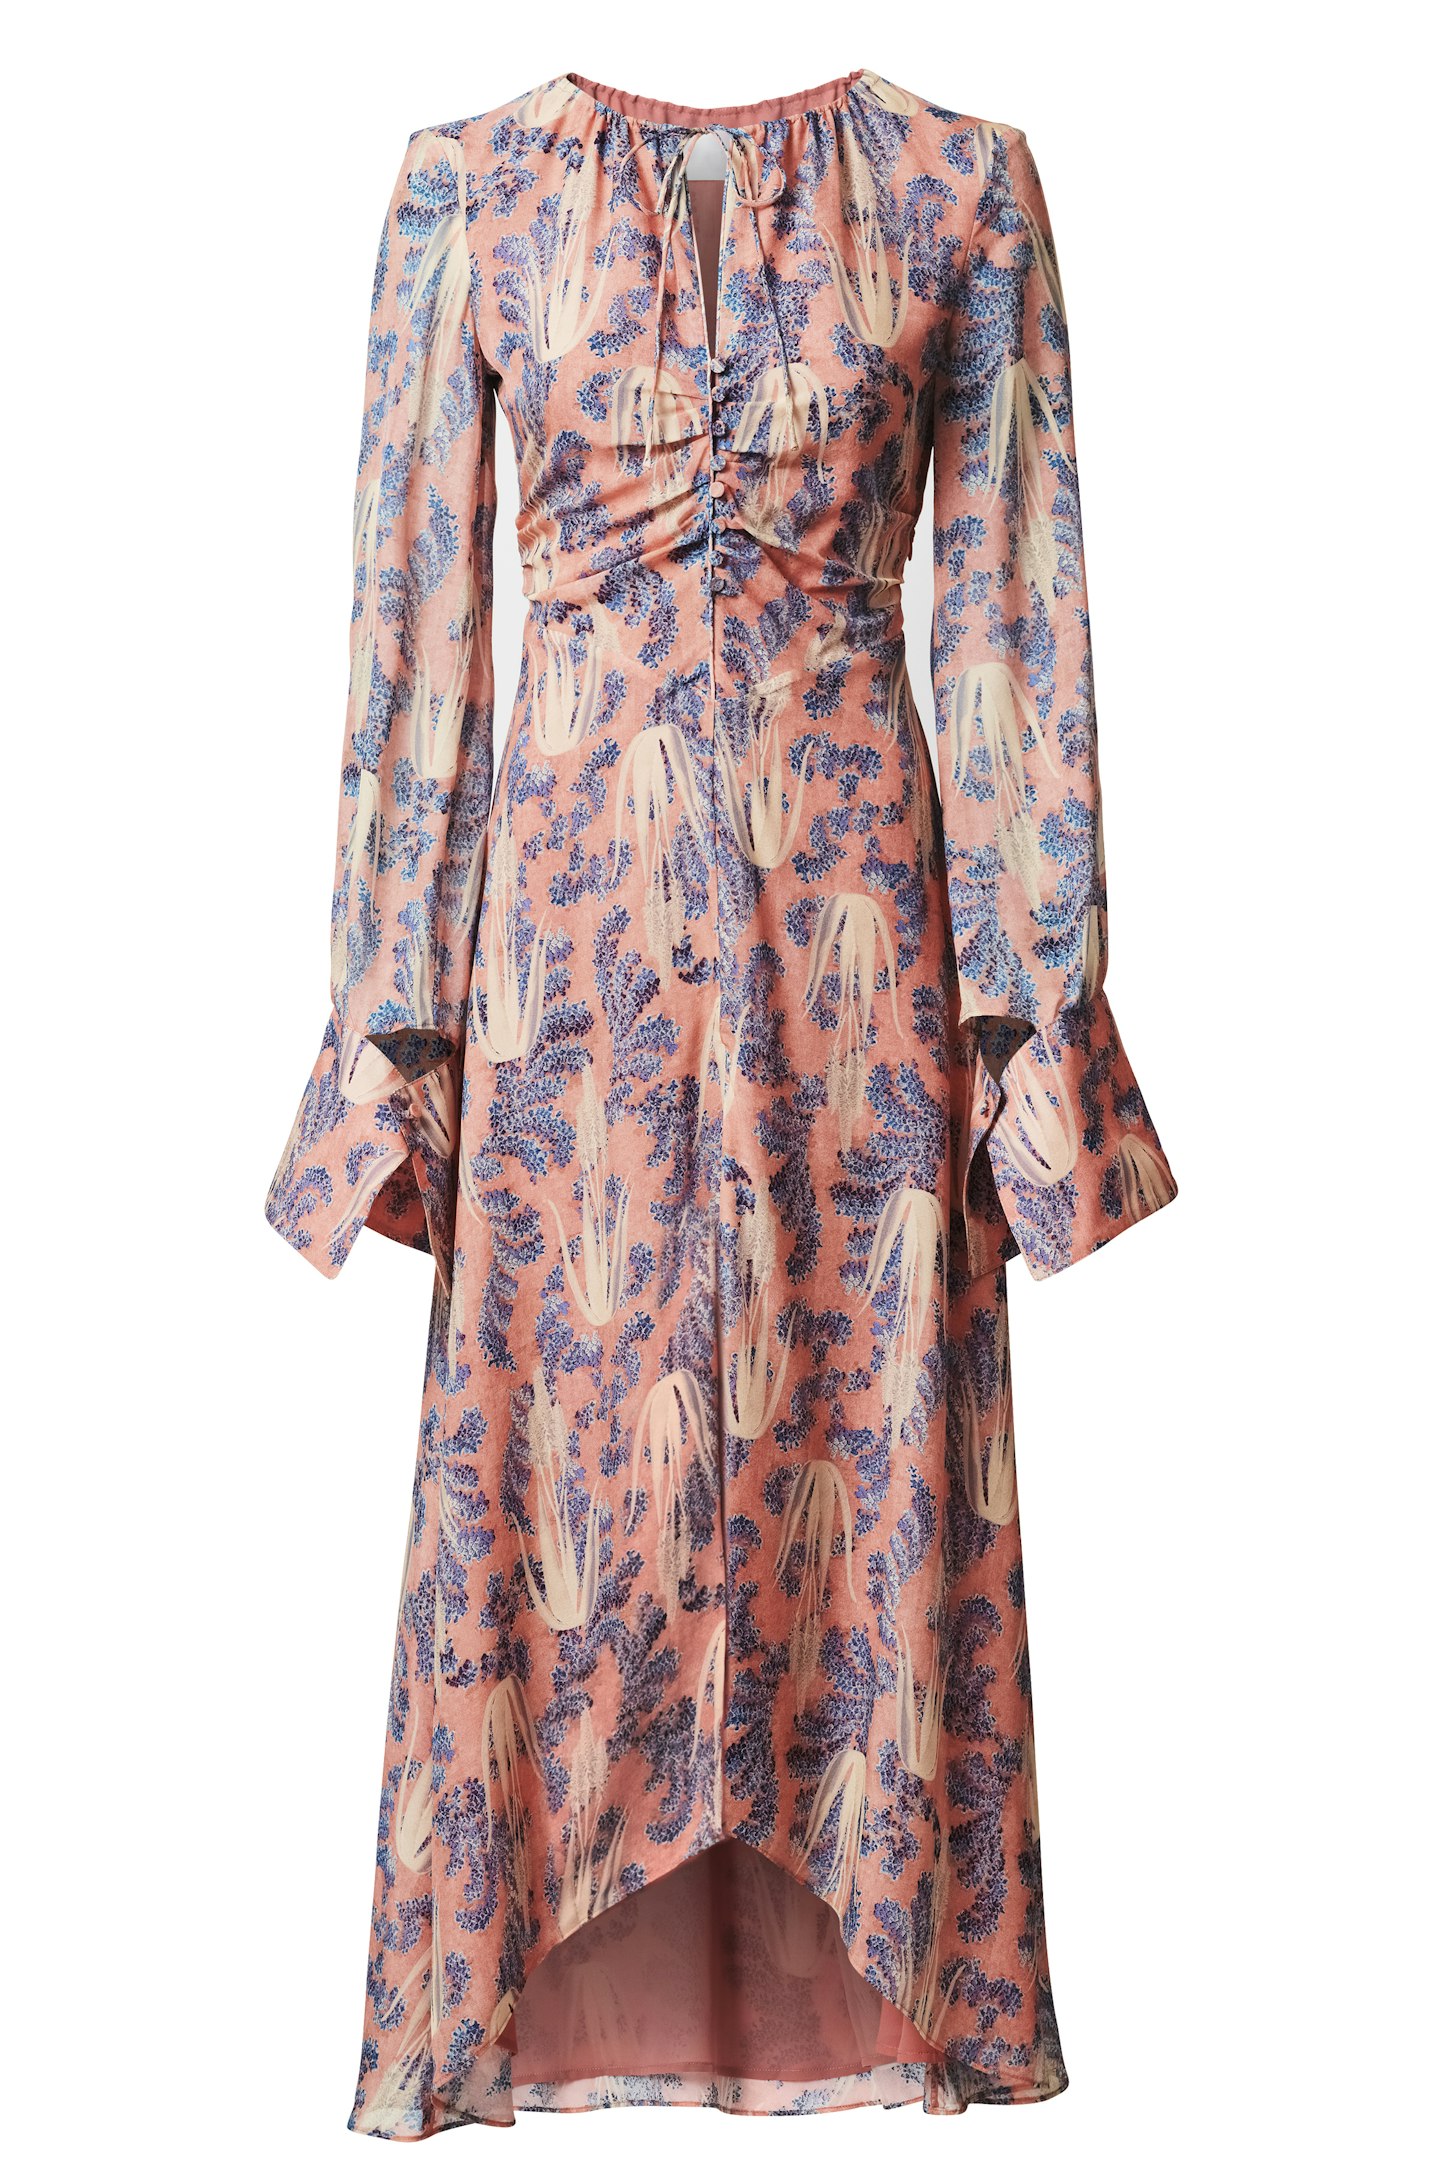 Silk Dress, £139.99